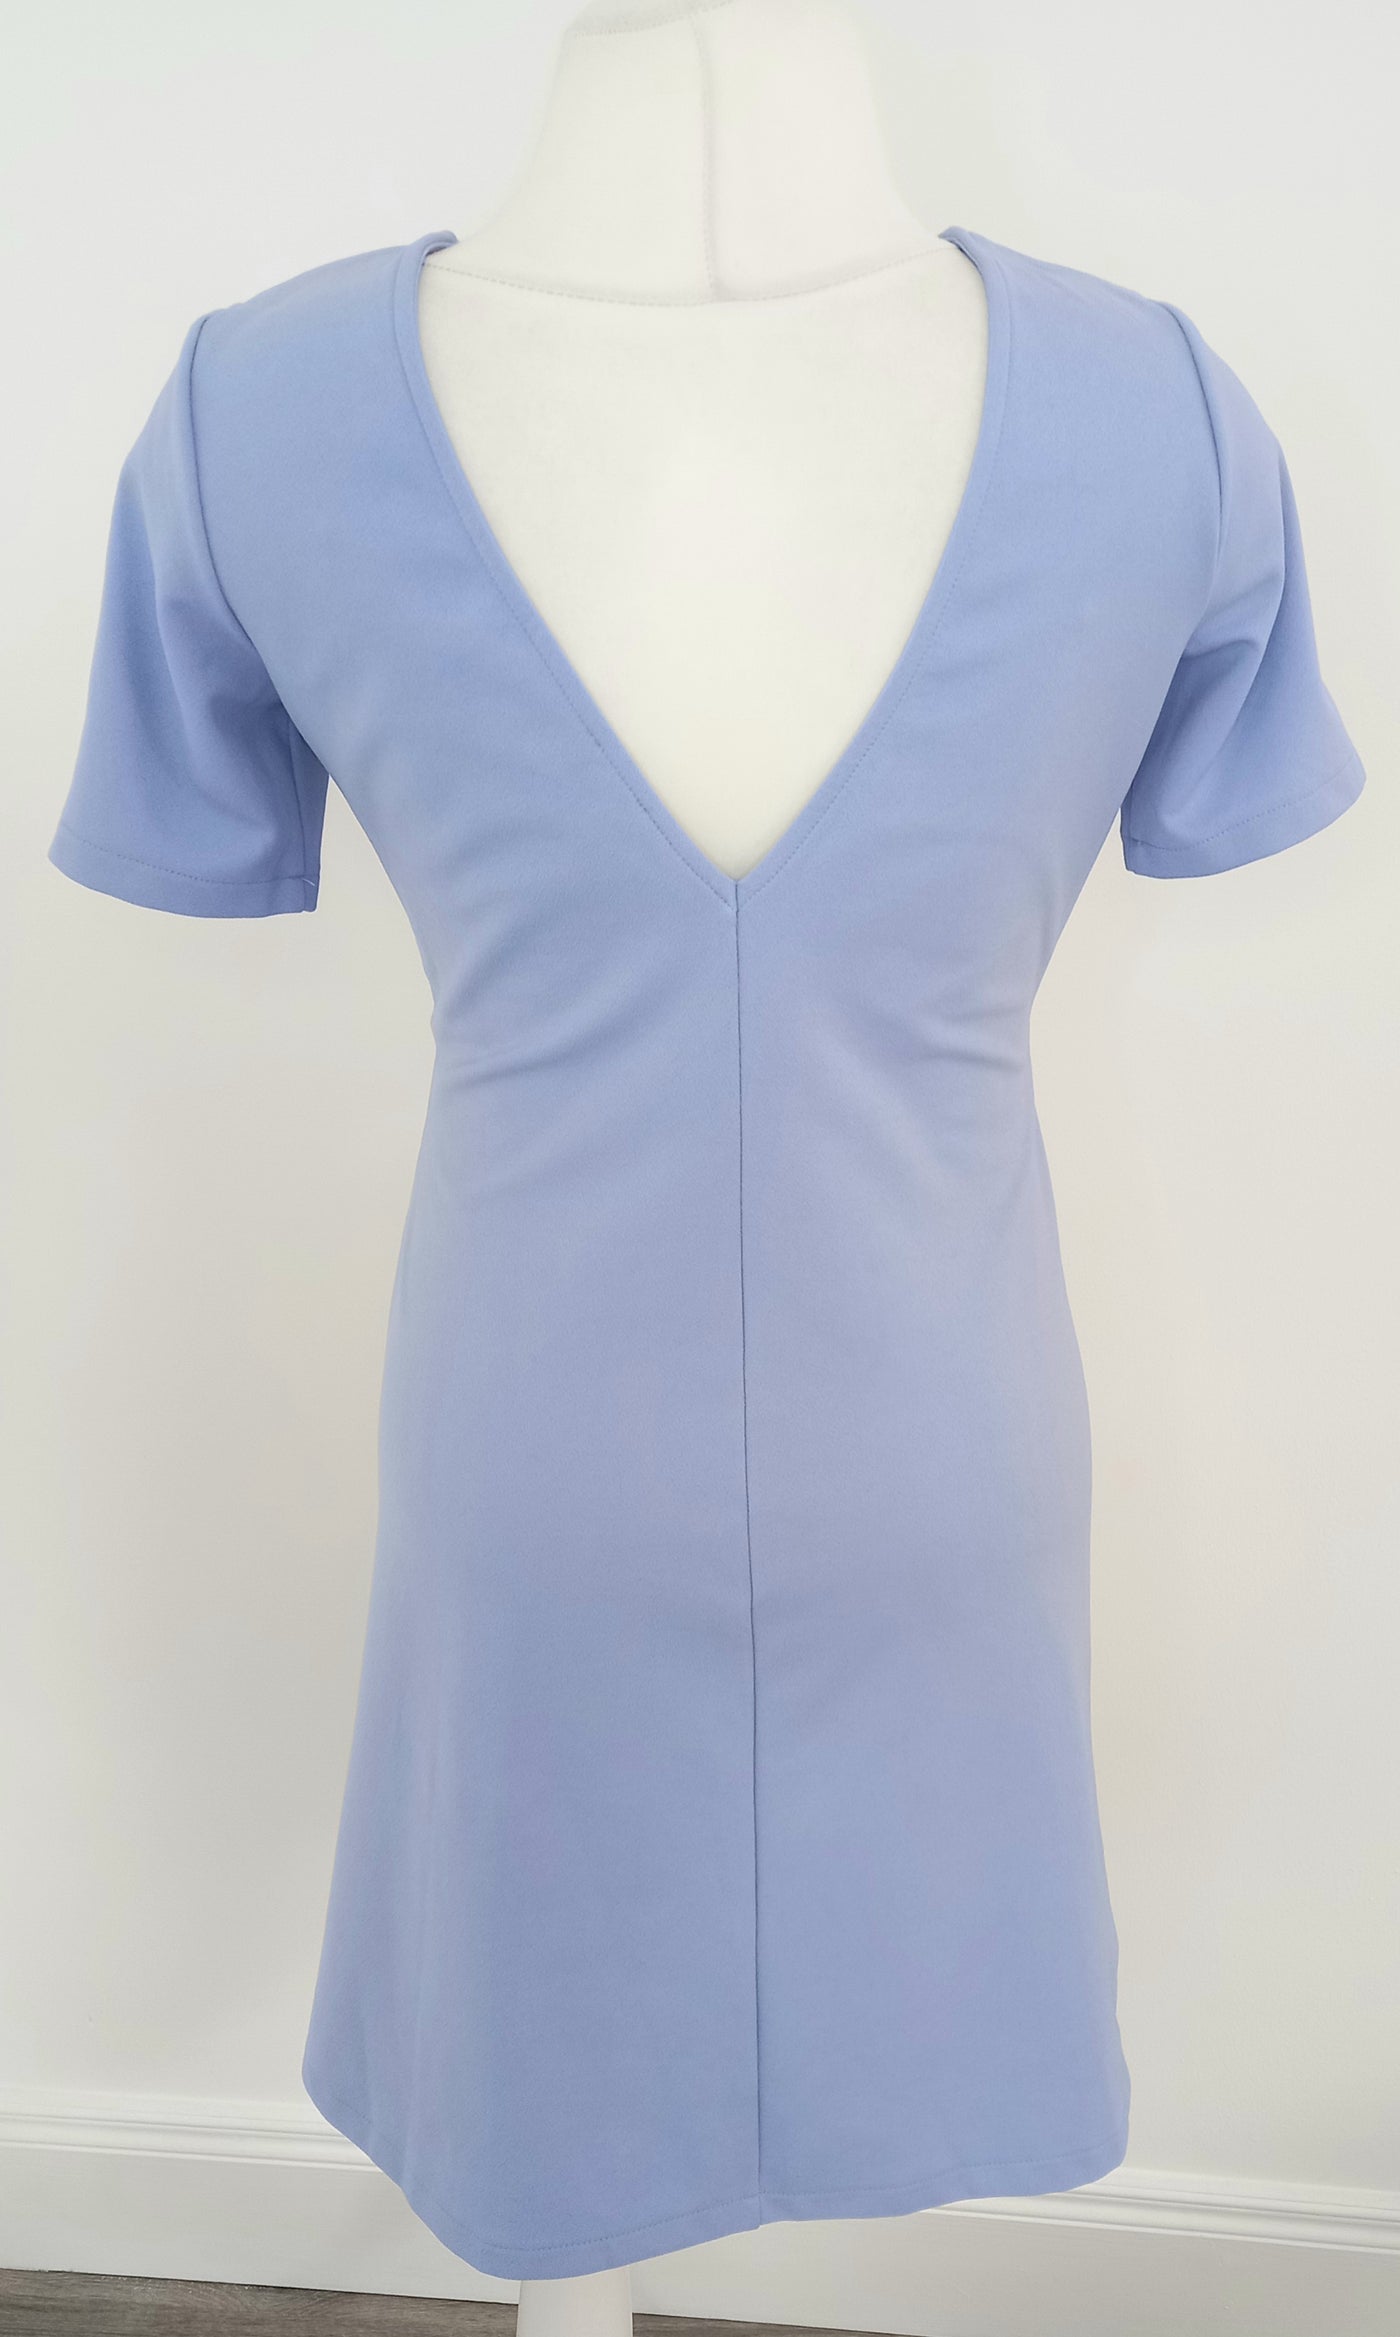 Asos Maternity Blue Drawstring Front Dress - Size 6